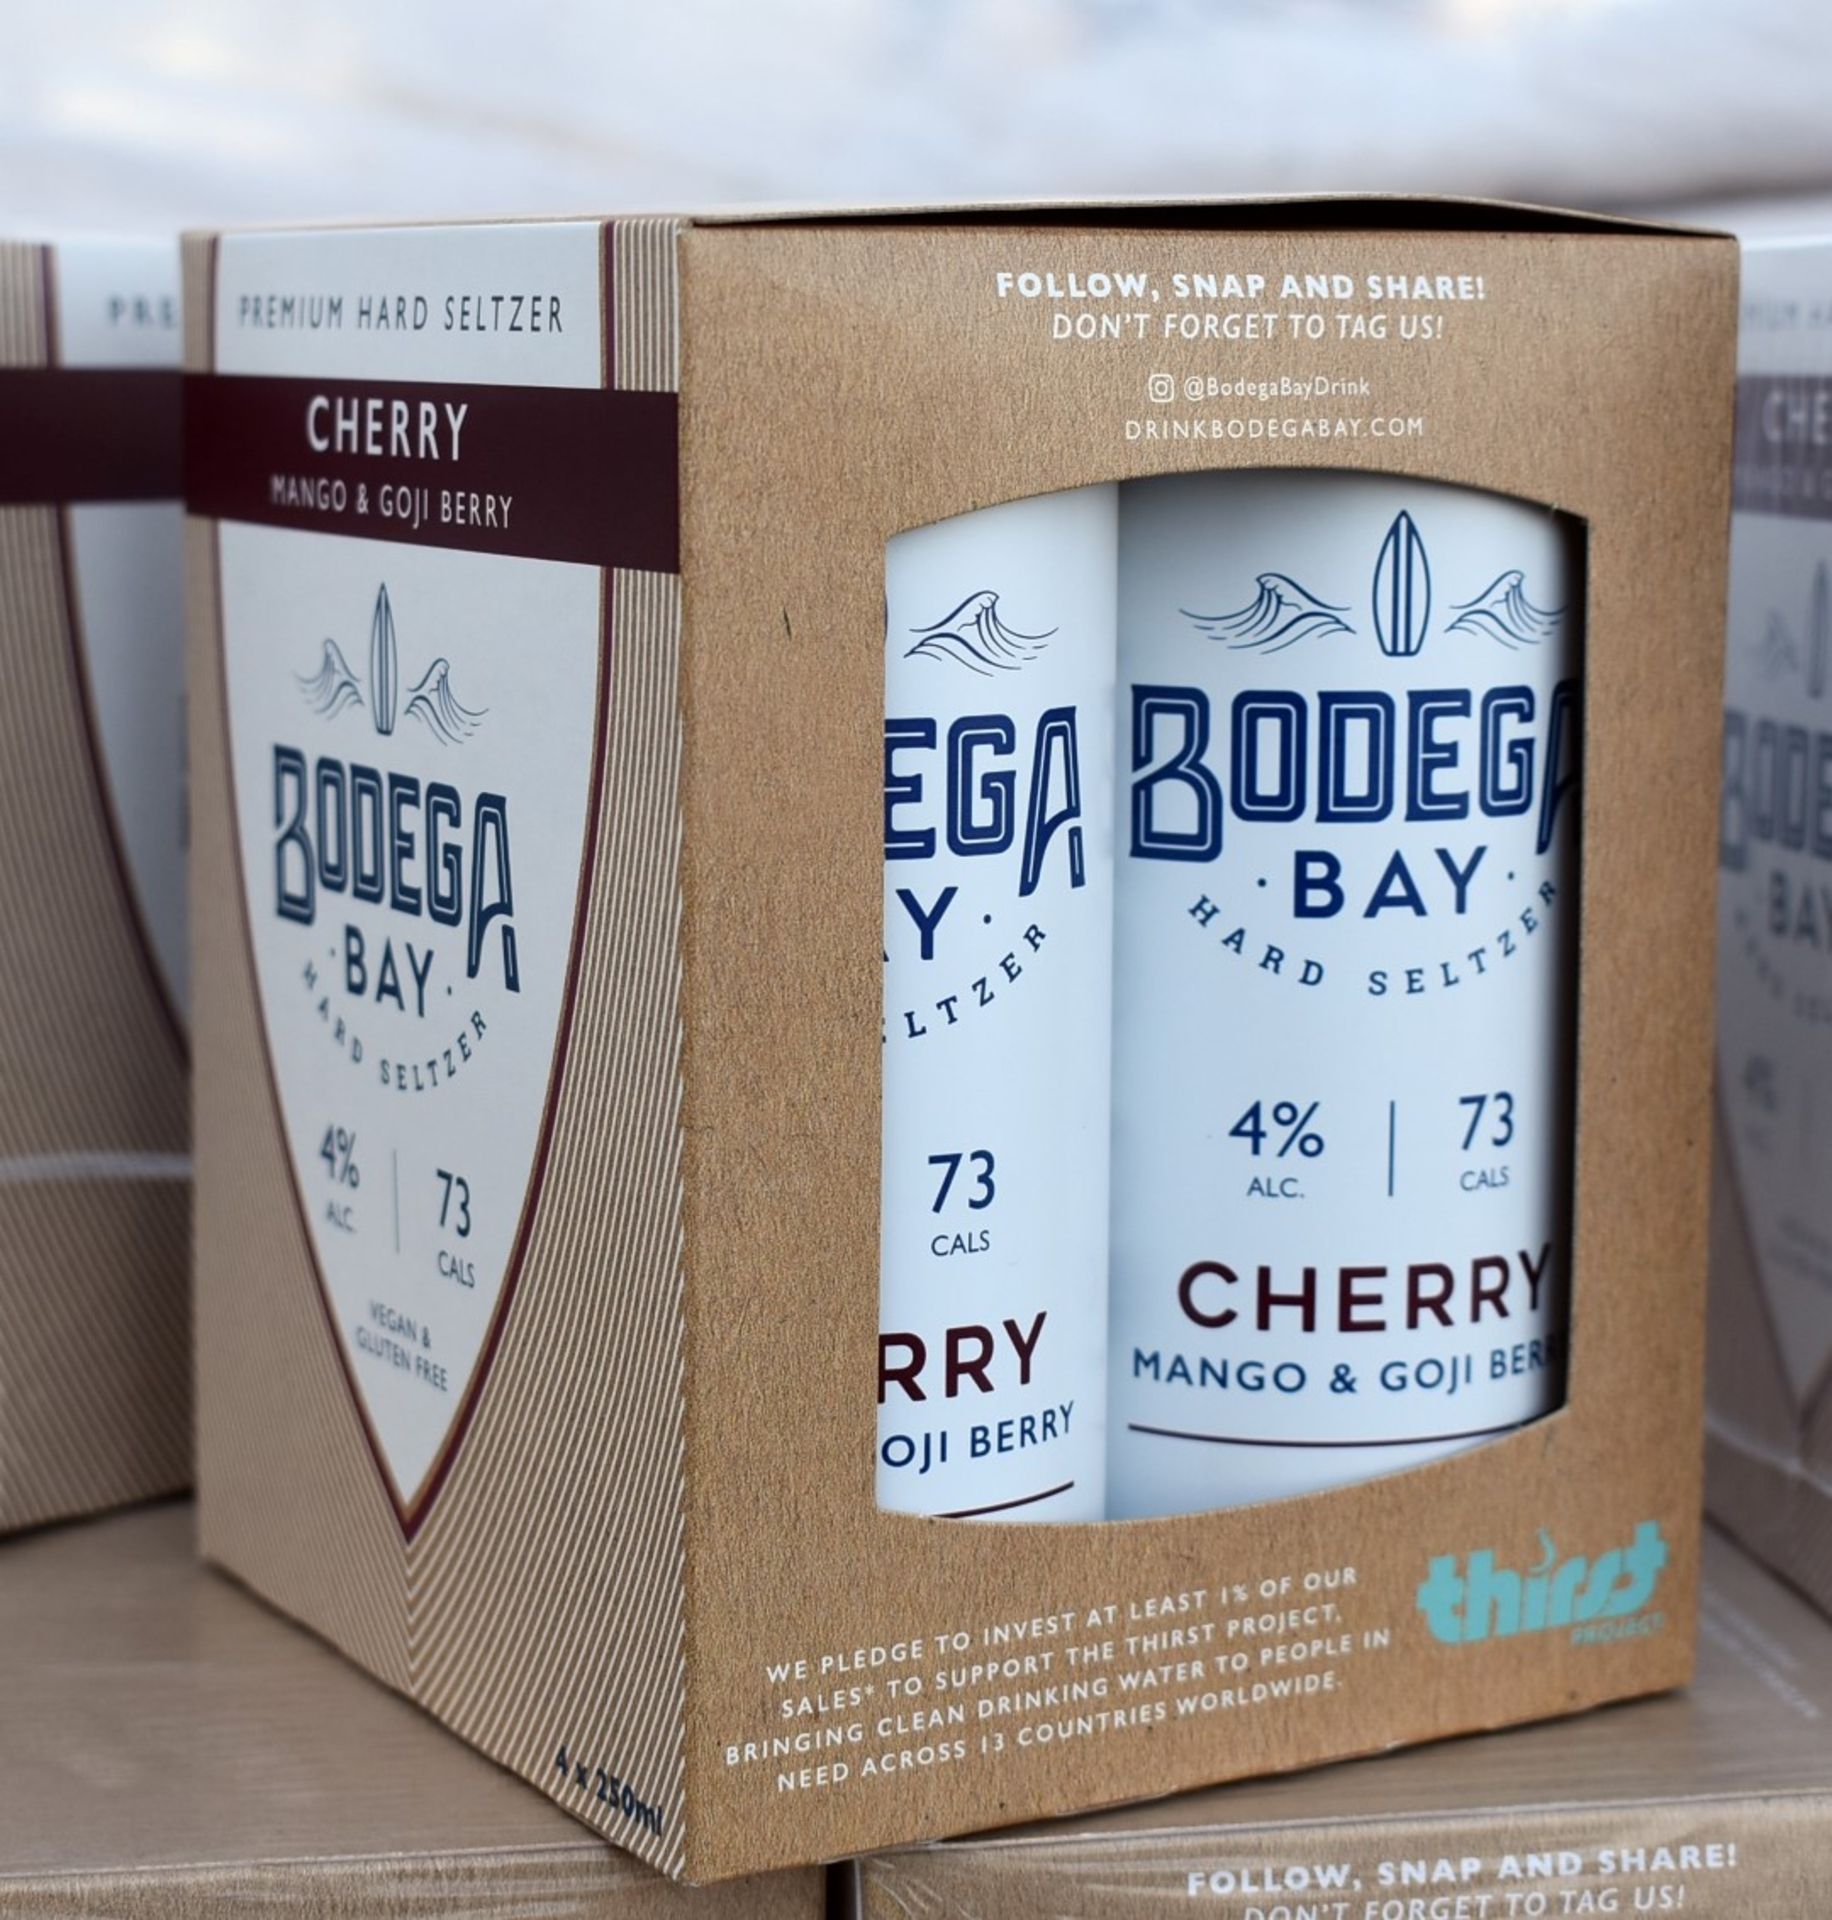 24 x Bodega Bay Hard Seltzer 250ml Alcoholic Sparkling Water Drinks - Cherry Mango & Goji Berry - 4% - Image 3 of 7